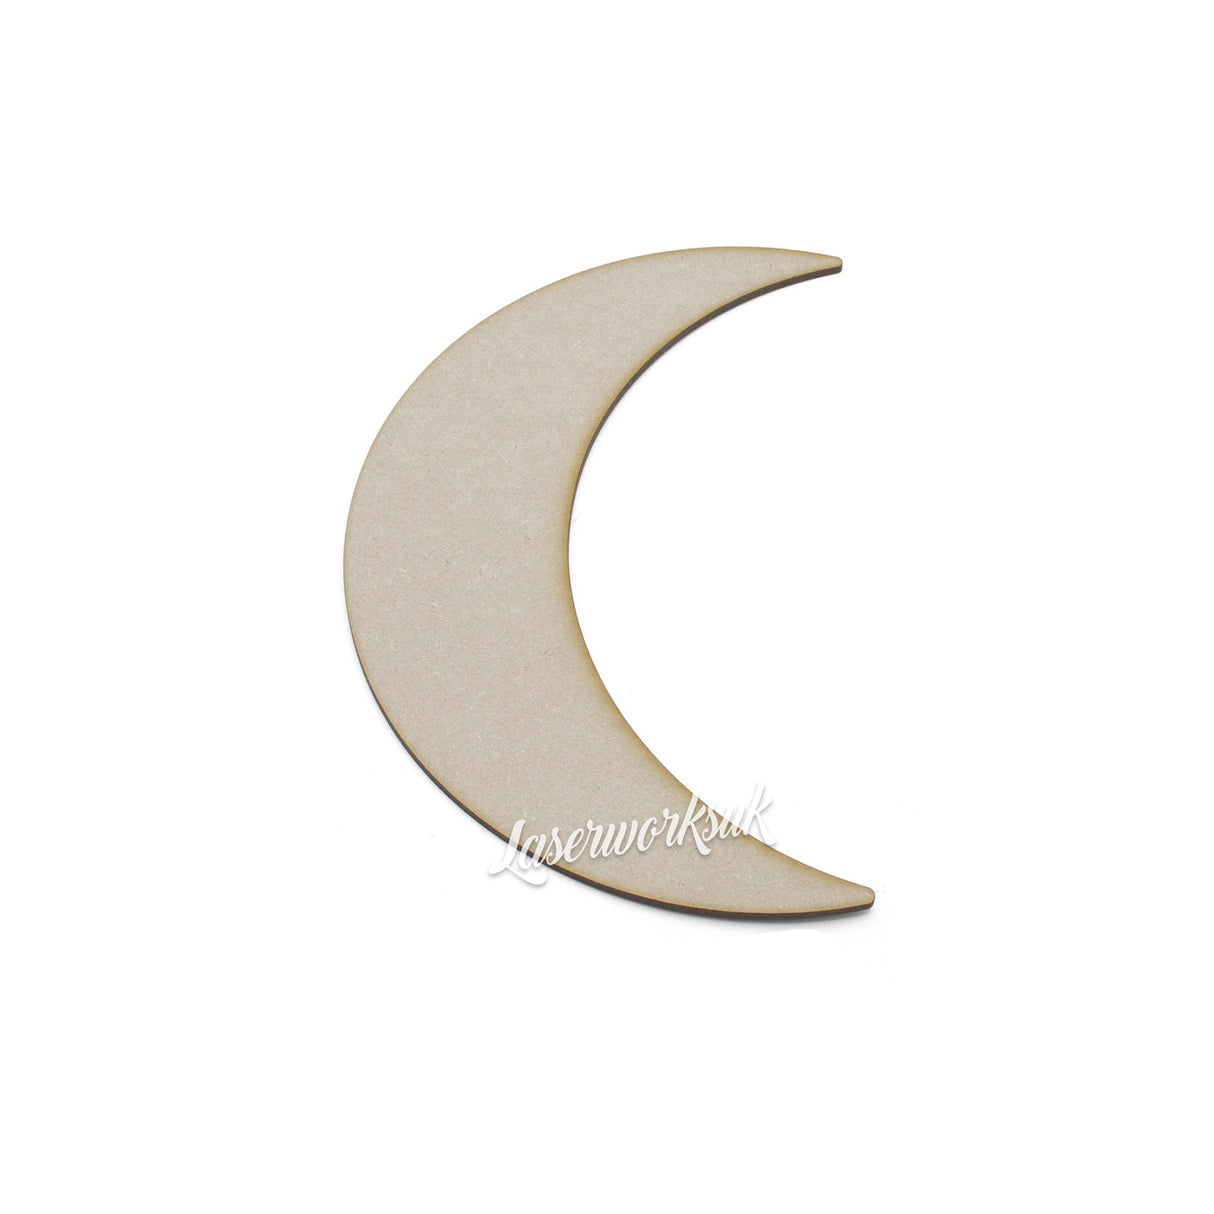 Crescent Moon Craft shapes - Laserworksuk